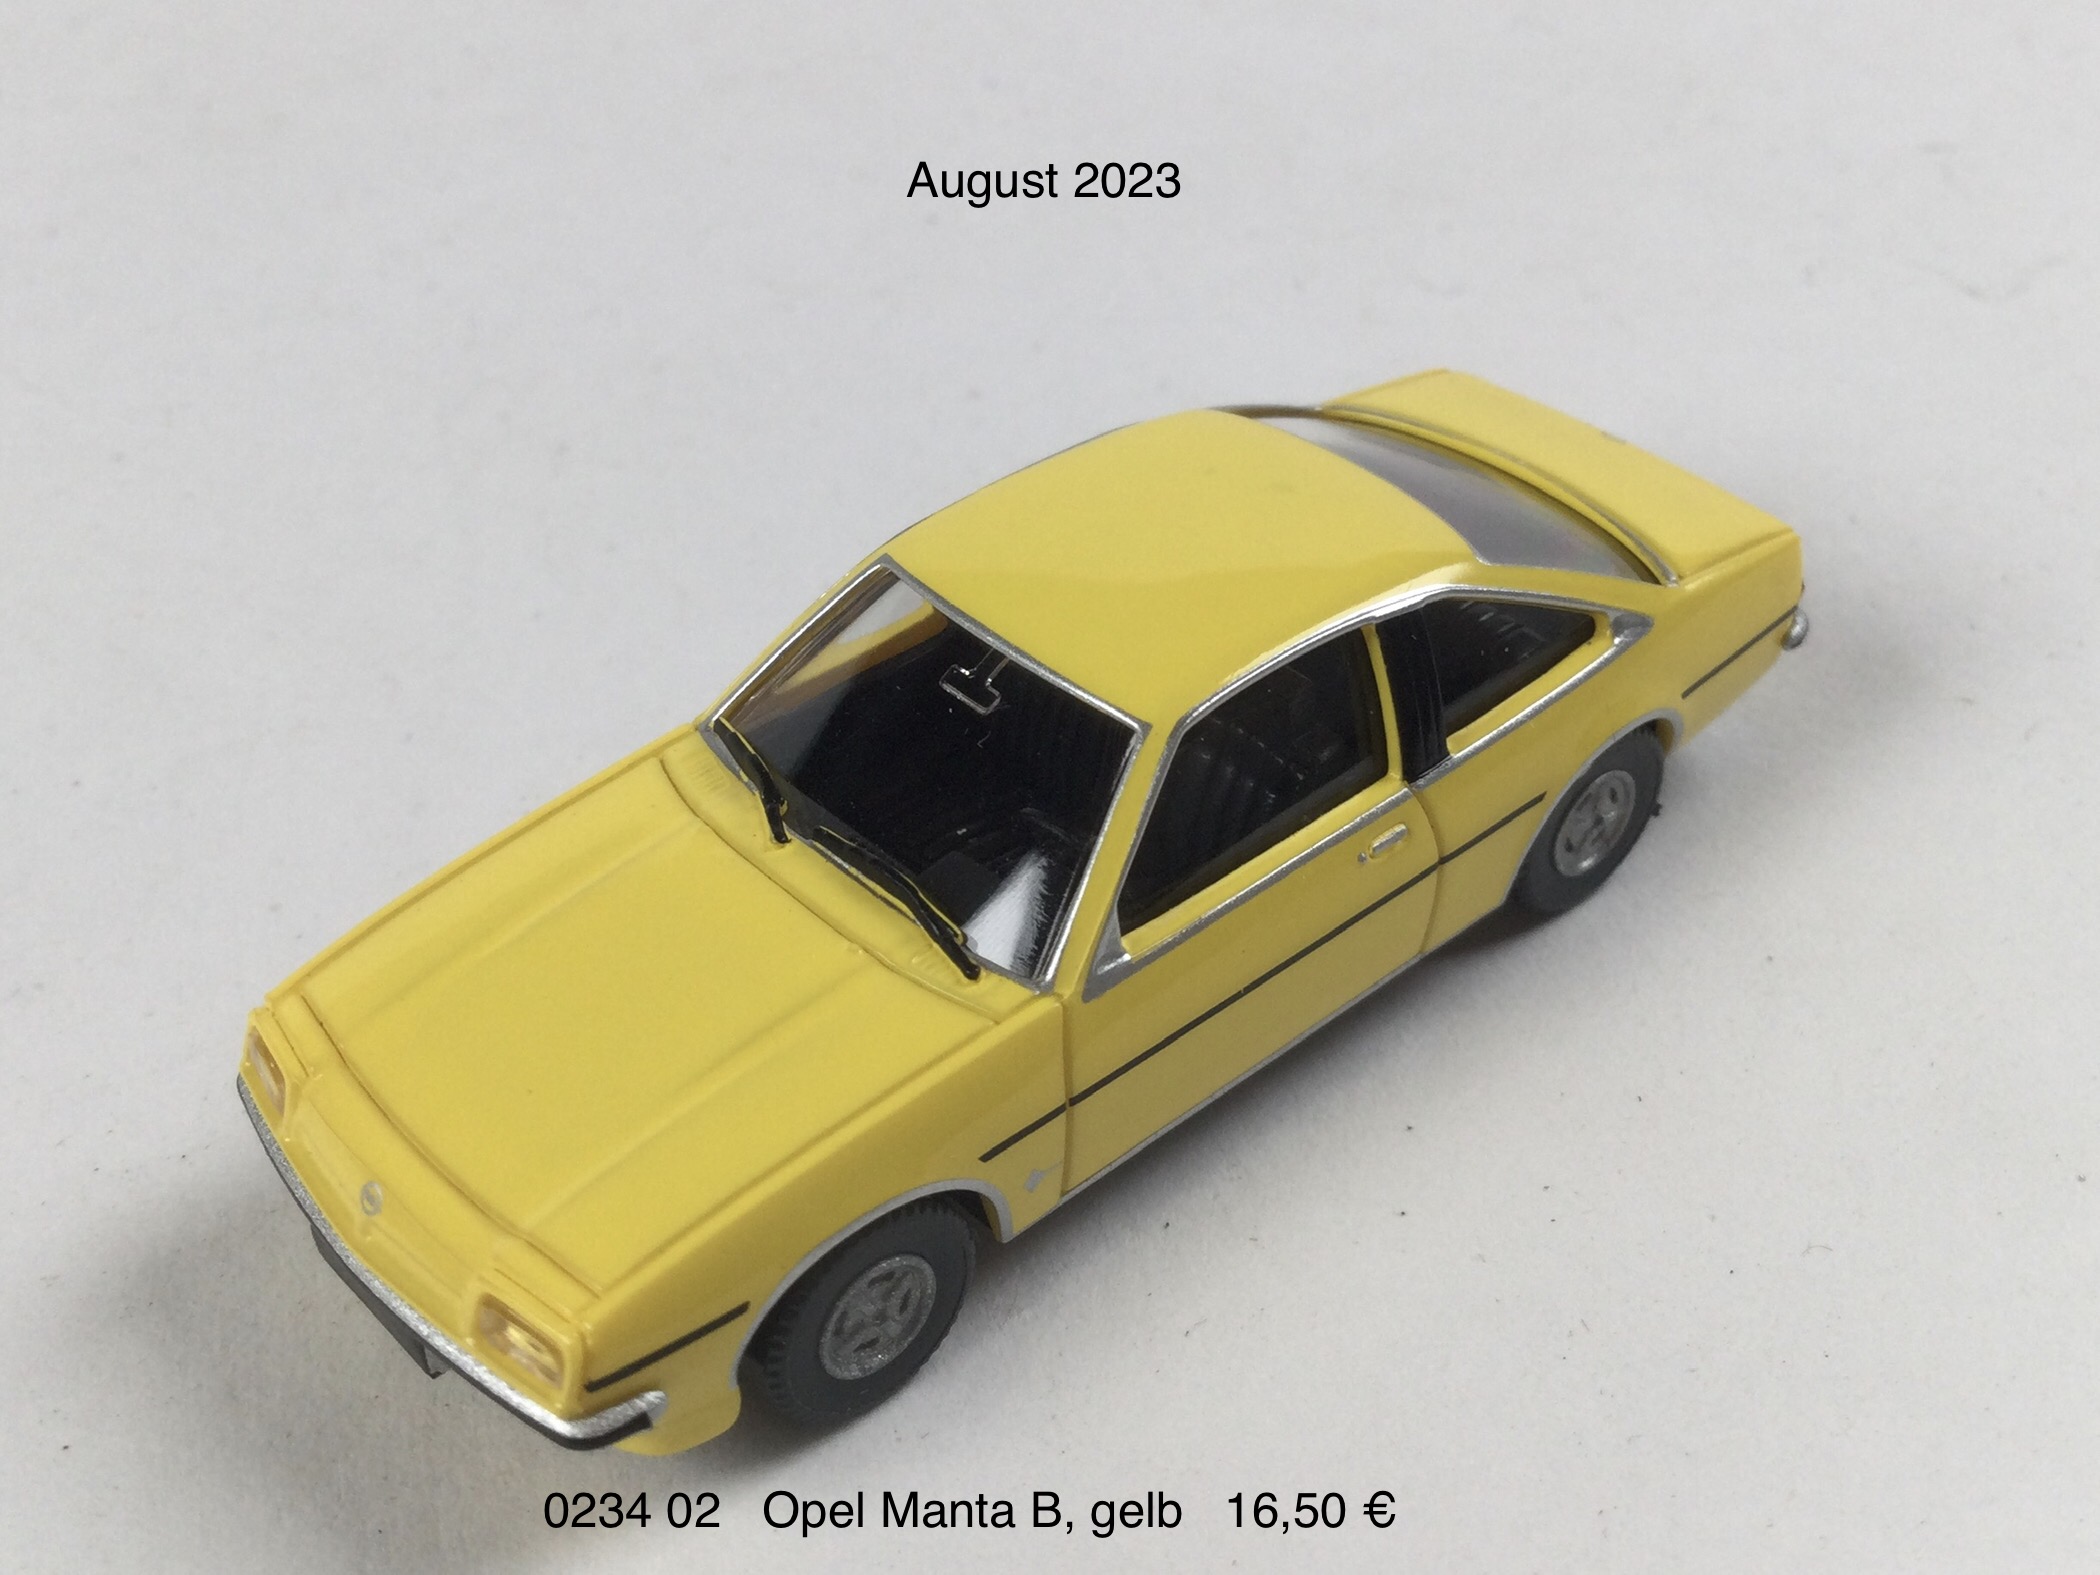 Opel Manta B "gelb"